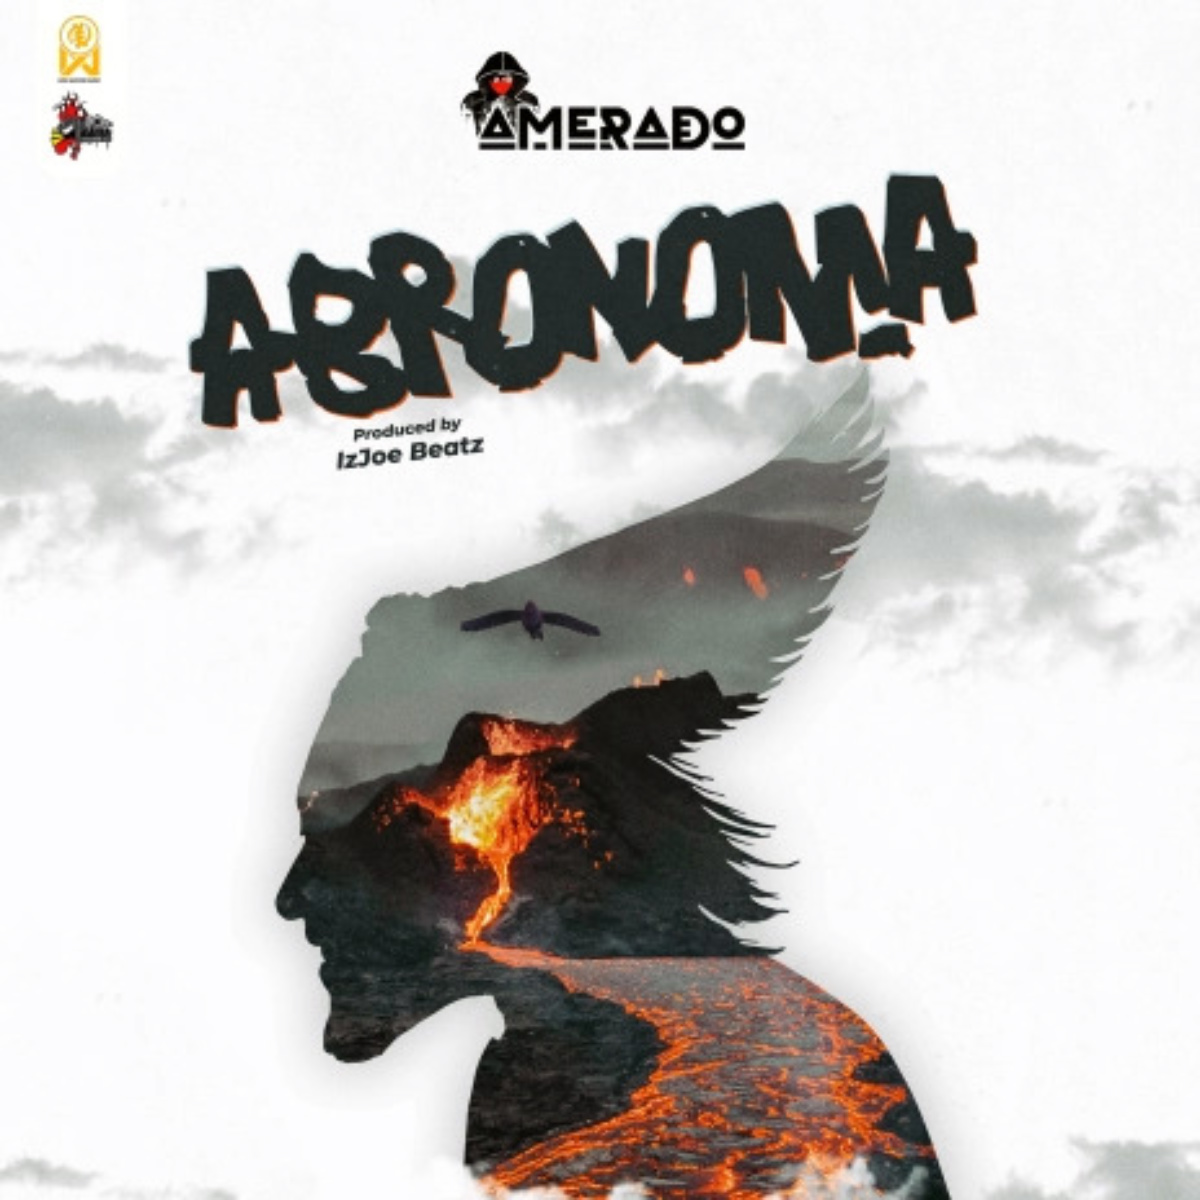 Abronoma by Amerado